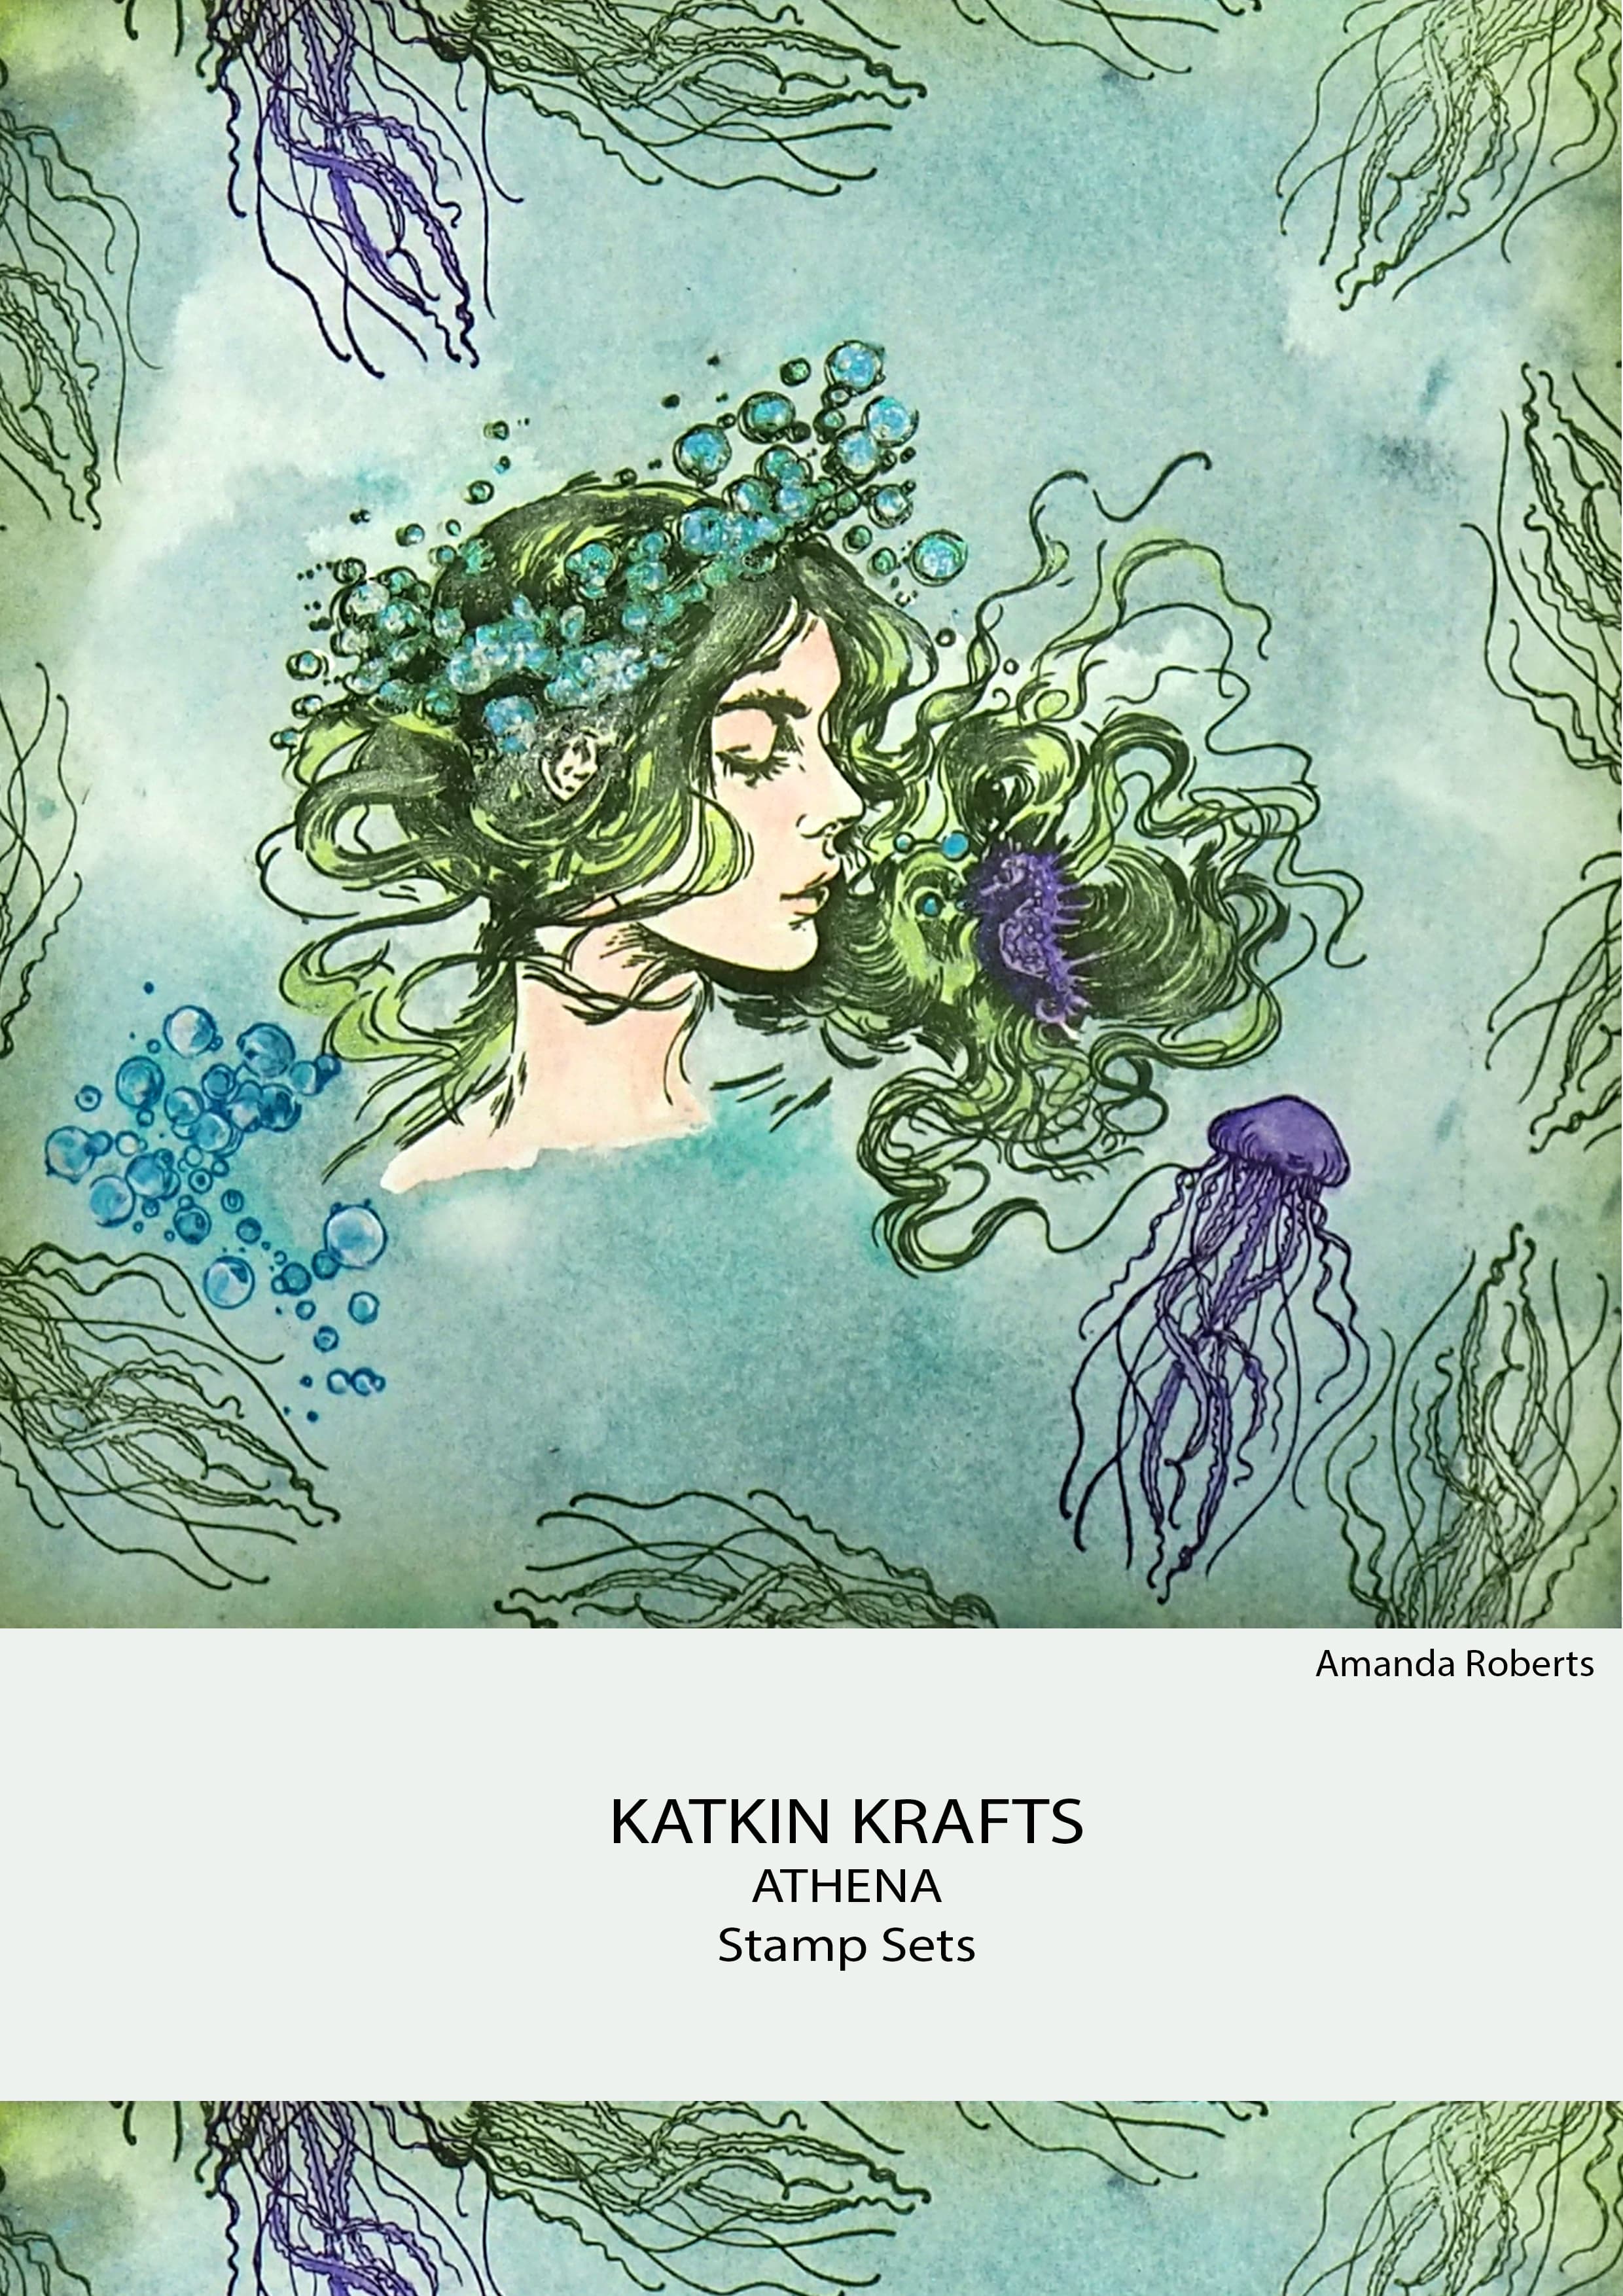 Katkin Krafts Athena 6 in x 8 in Clear Stamp Set